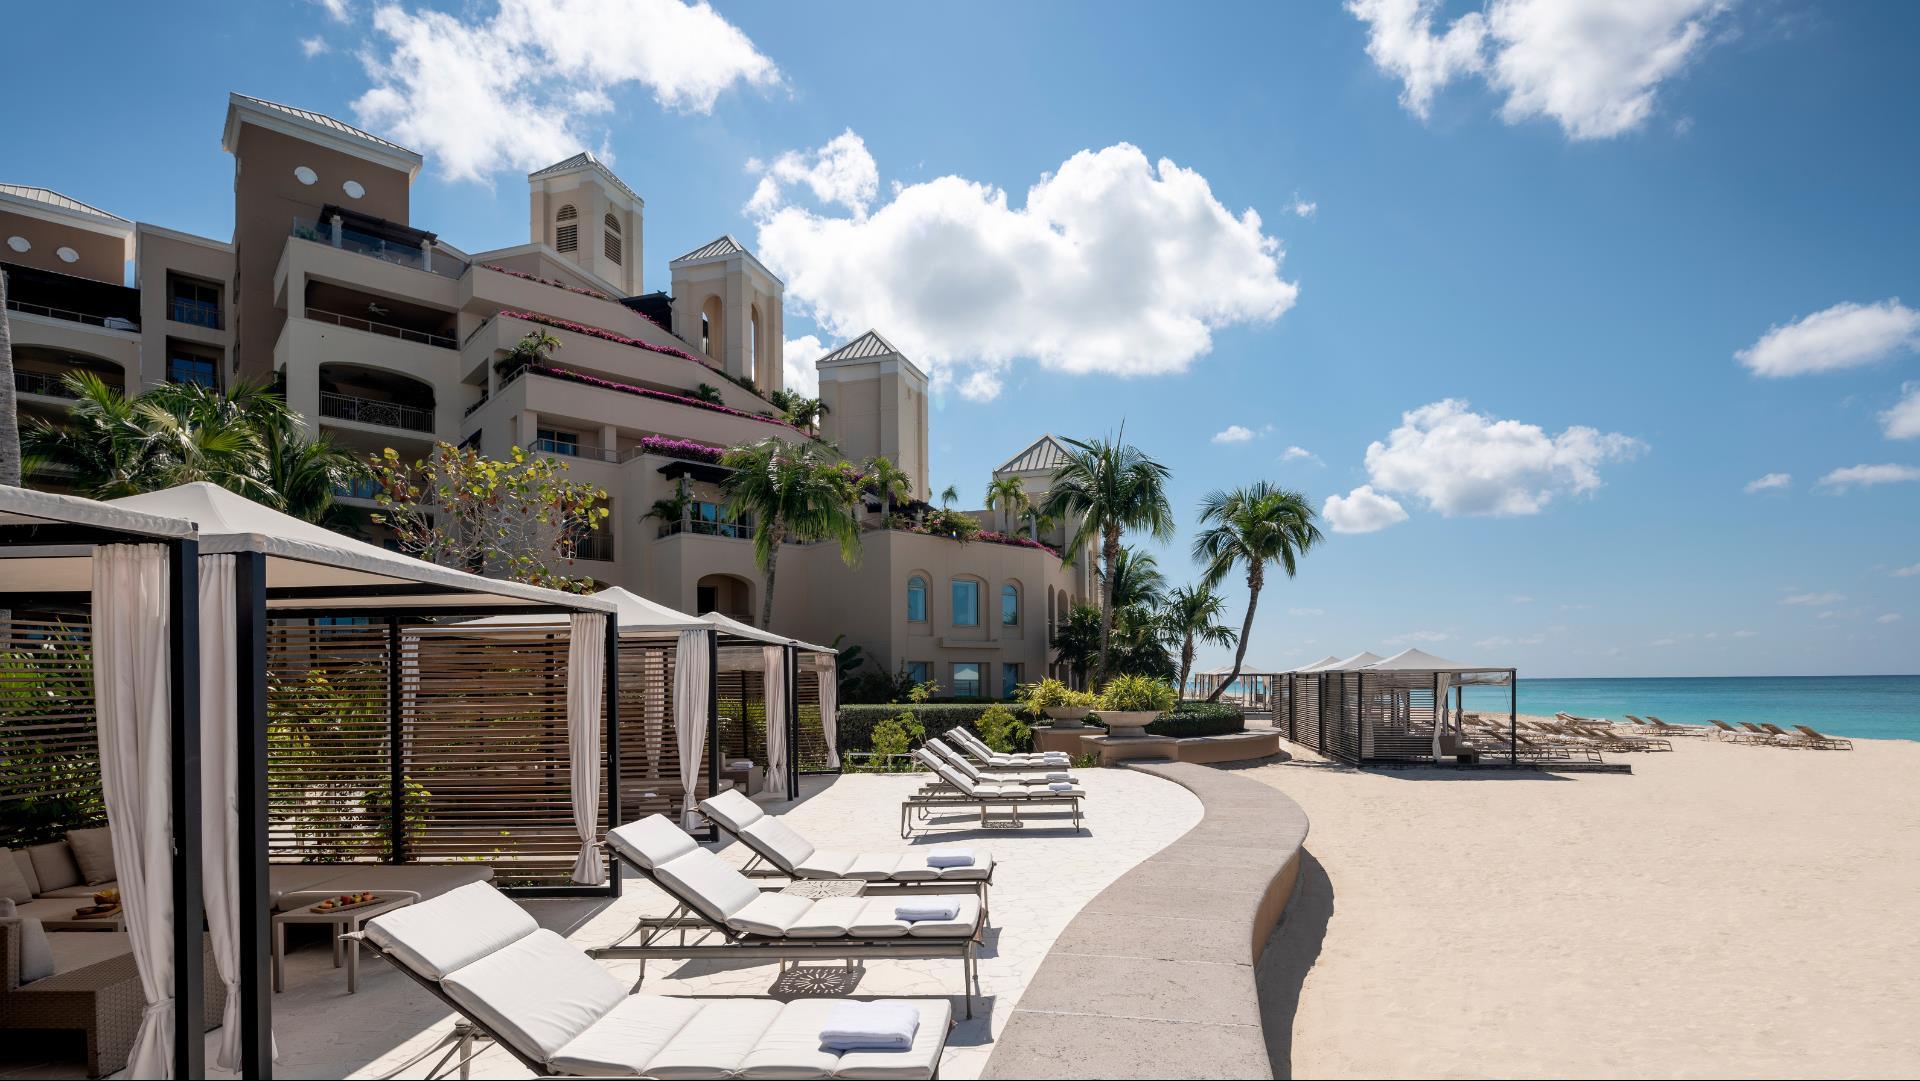 The Ritz-Carlton, Grand Cayman in Grand Cayman, KY